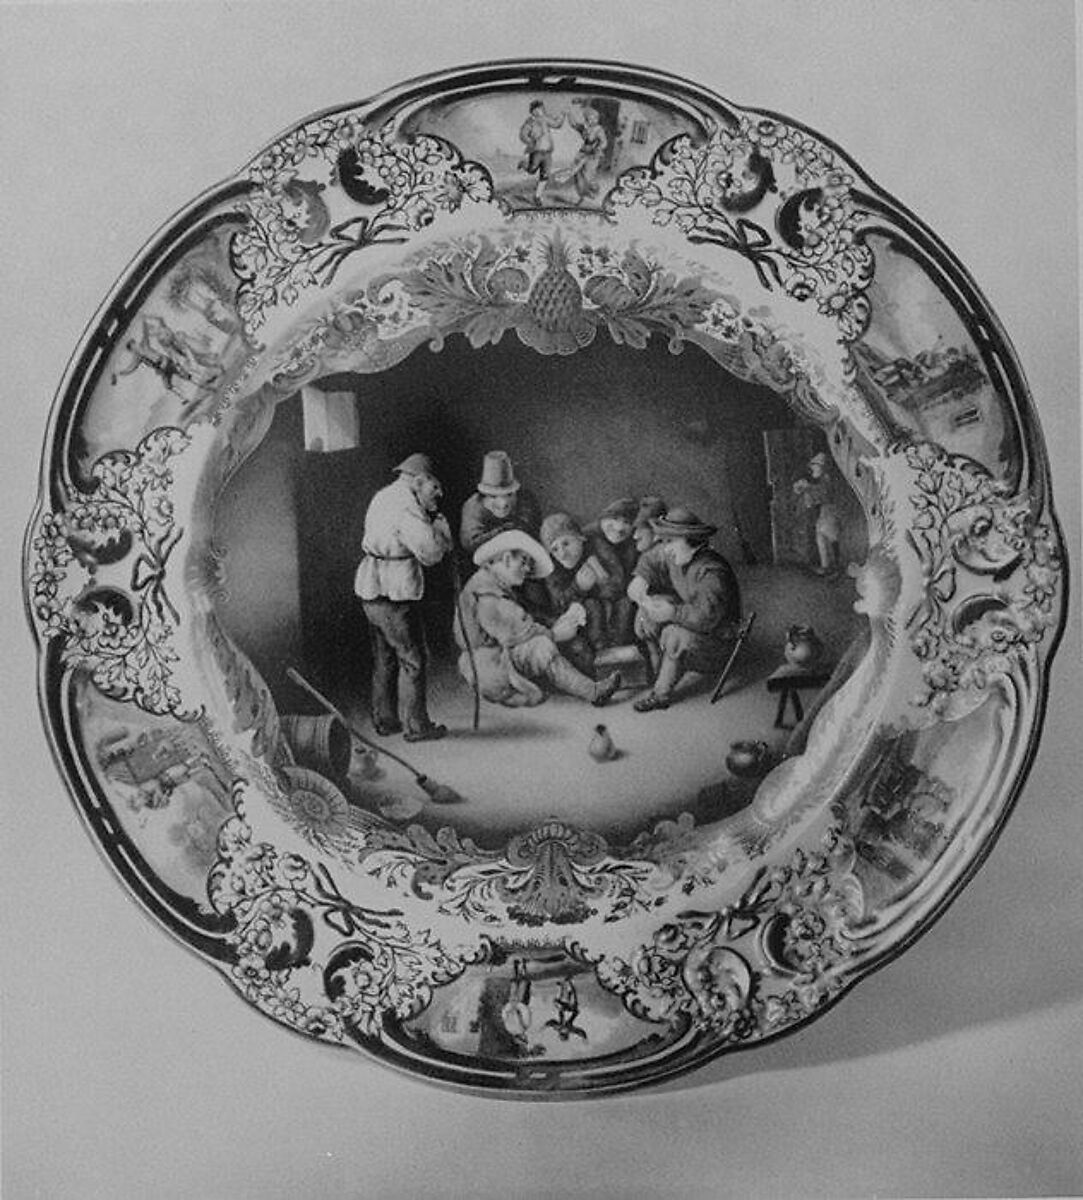 Plate, Decoration attributed to James Plant, Soft-paste porcelain, Welsh, Nantgaru 